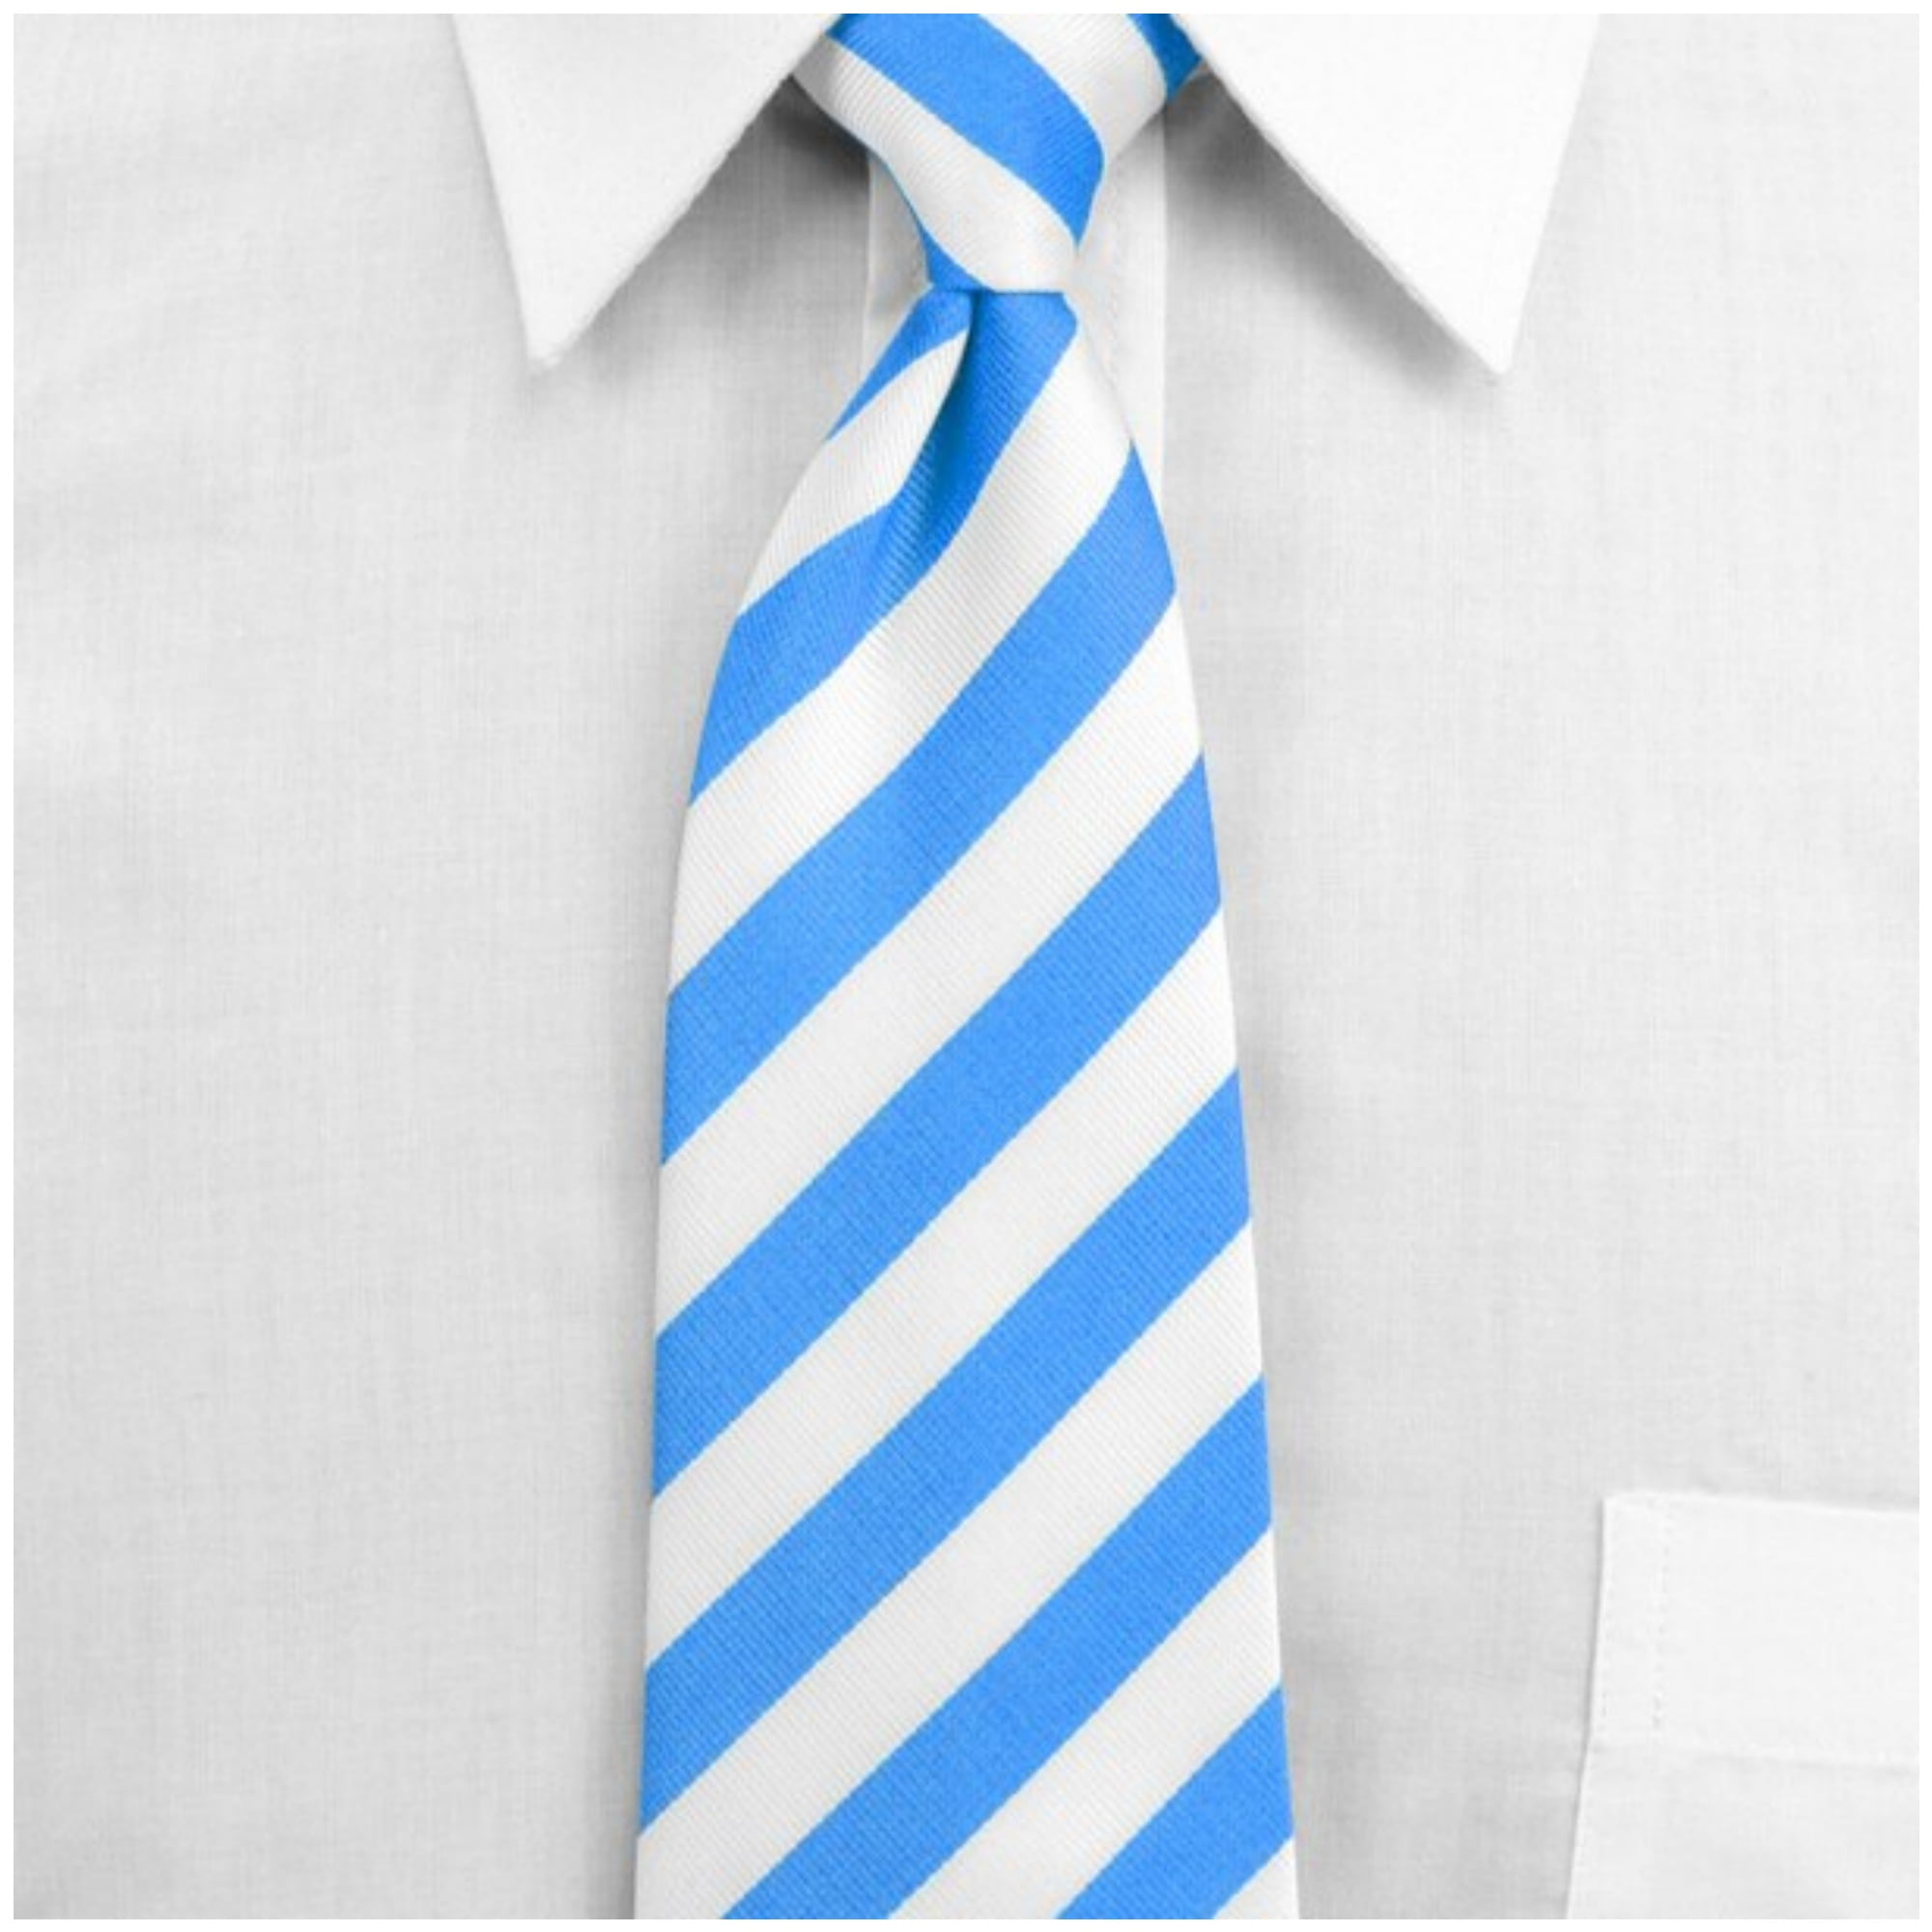 Red Satin Tie | Standard, Extra Long, Skinny, & Boys Necktie Standard 58''× 3.35